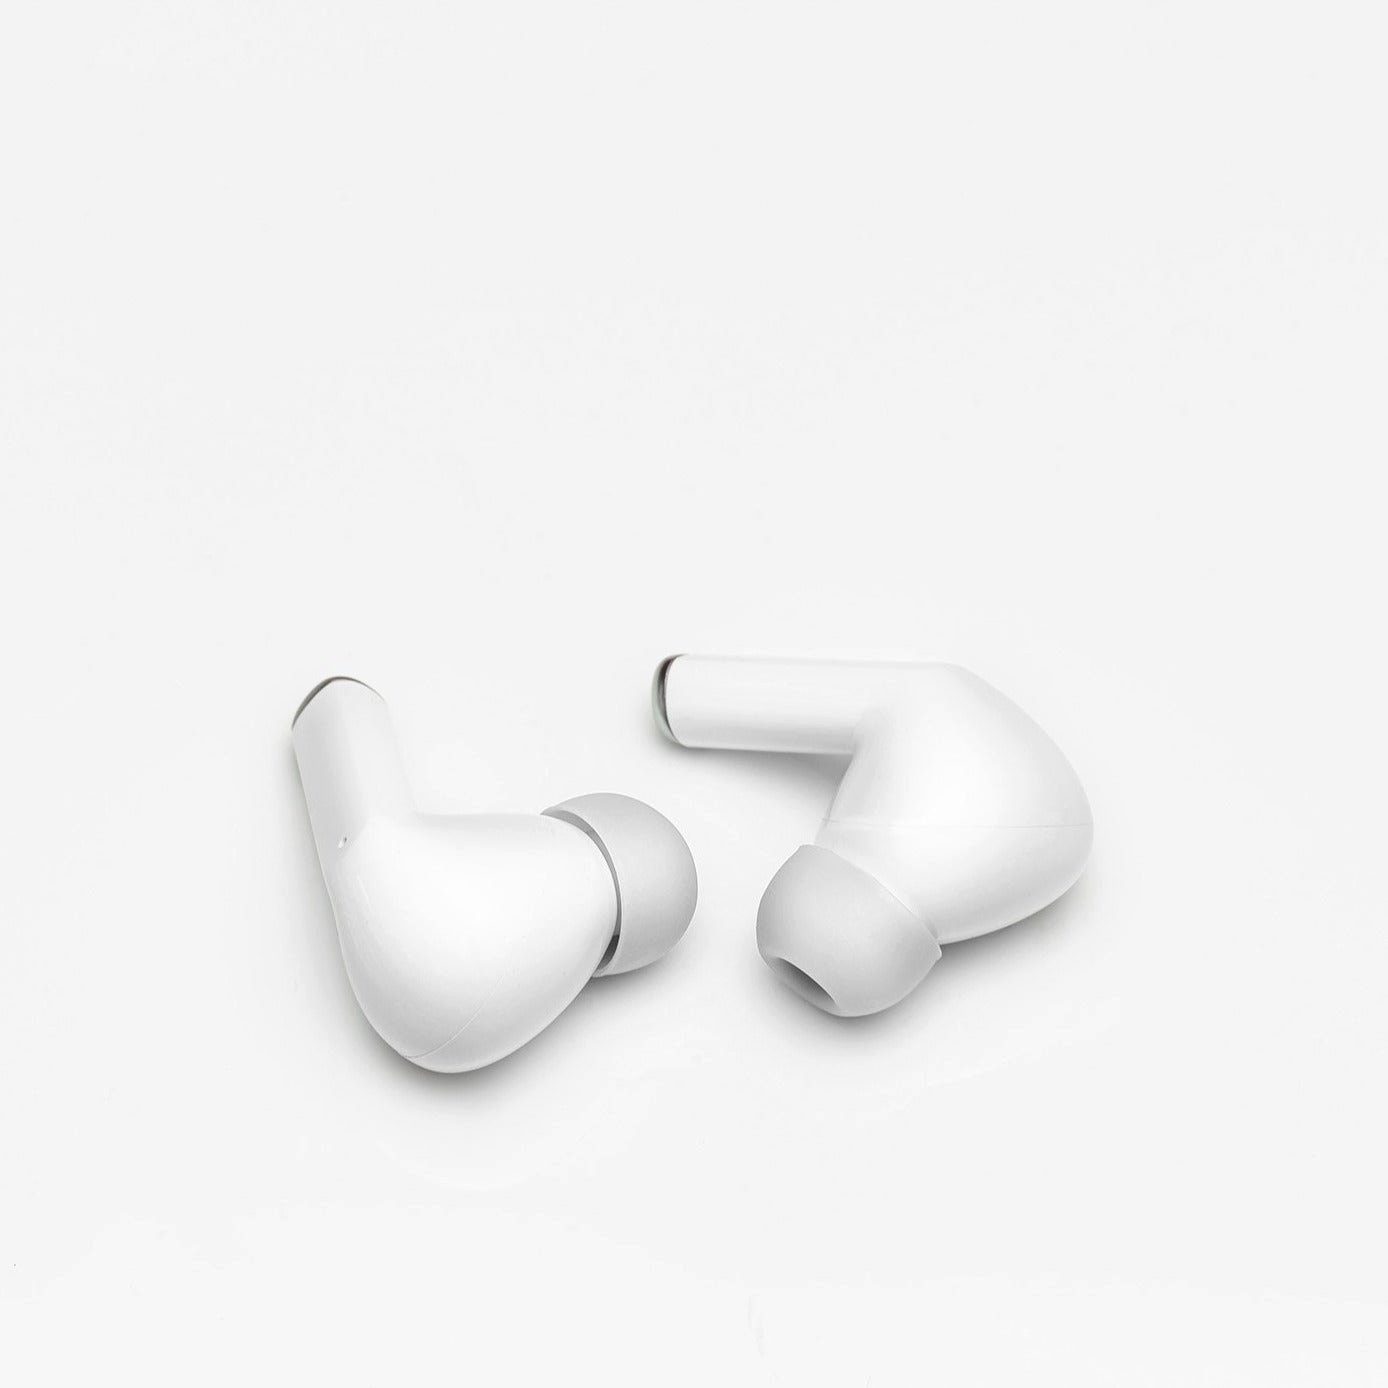 Blaupunkt TWS 20 In-Ear-Kopfhörer (Google-Assistant, Siri, Bluetooth) weiss